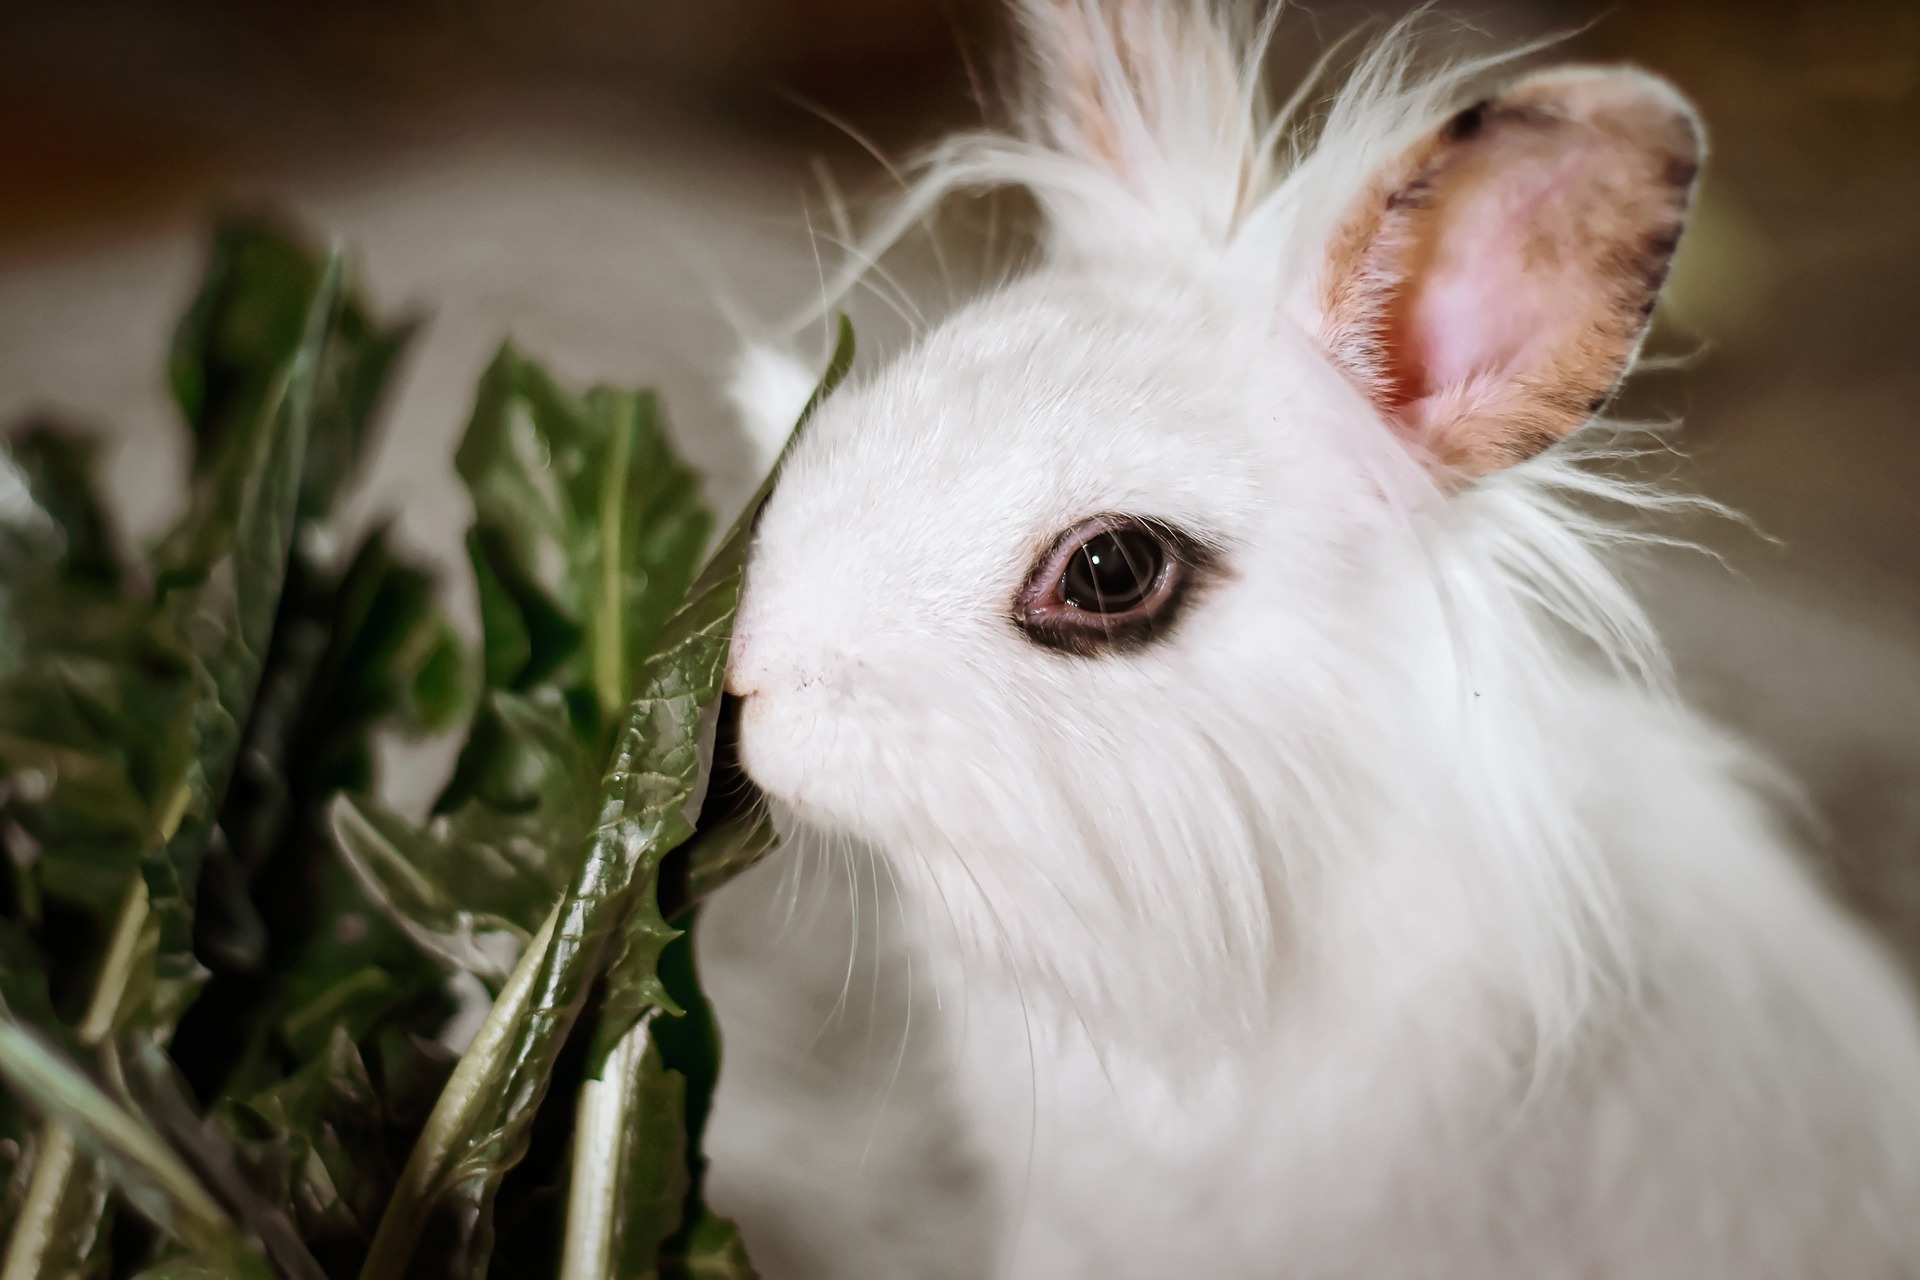 Baby rabbit eating vegetables